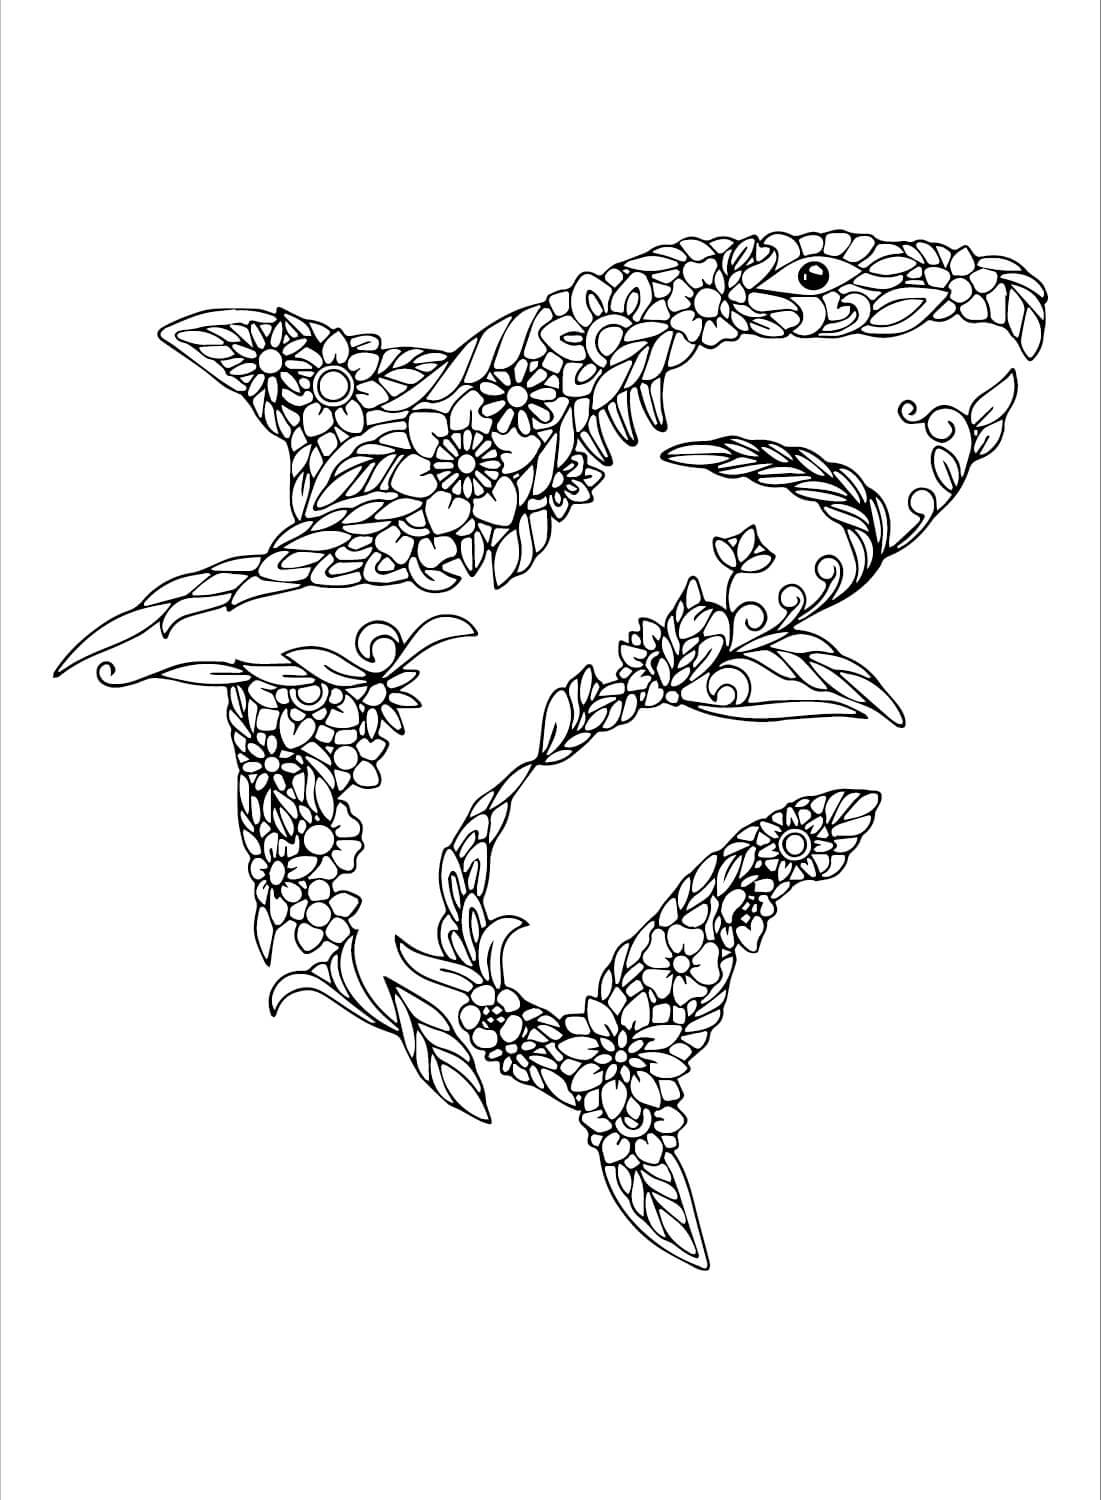 Mandala Shark With Flowers Coloring Page Mandalas